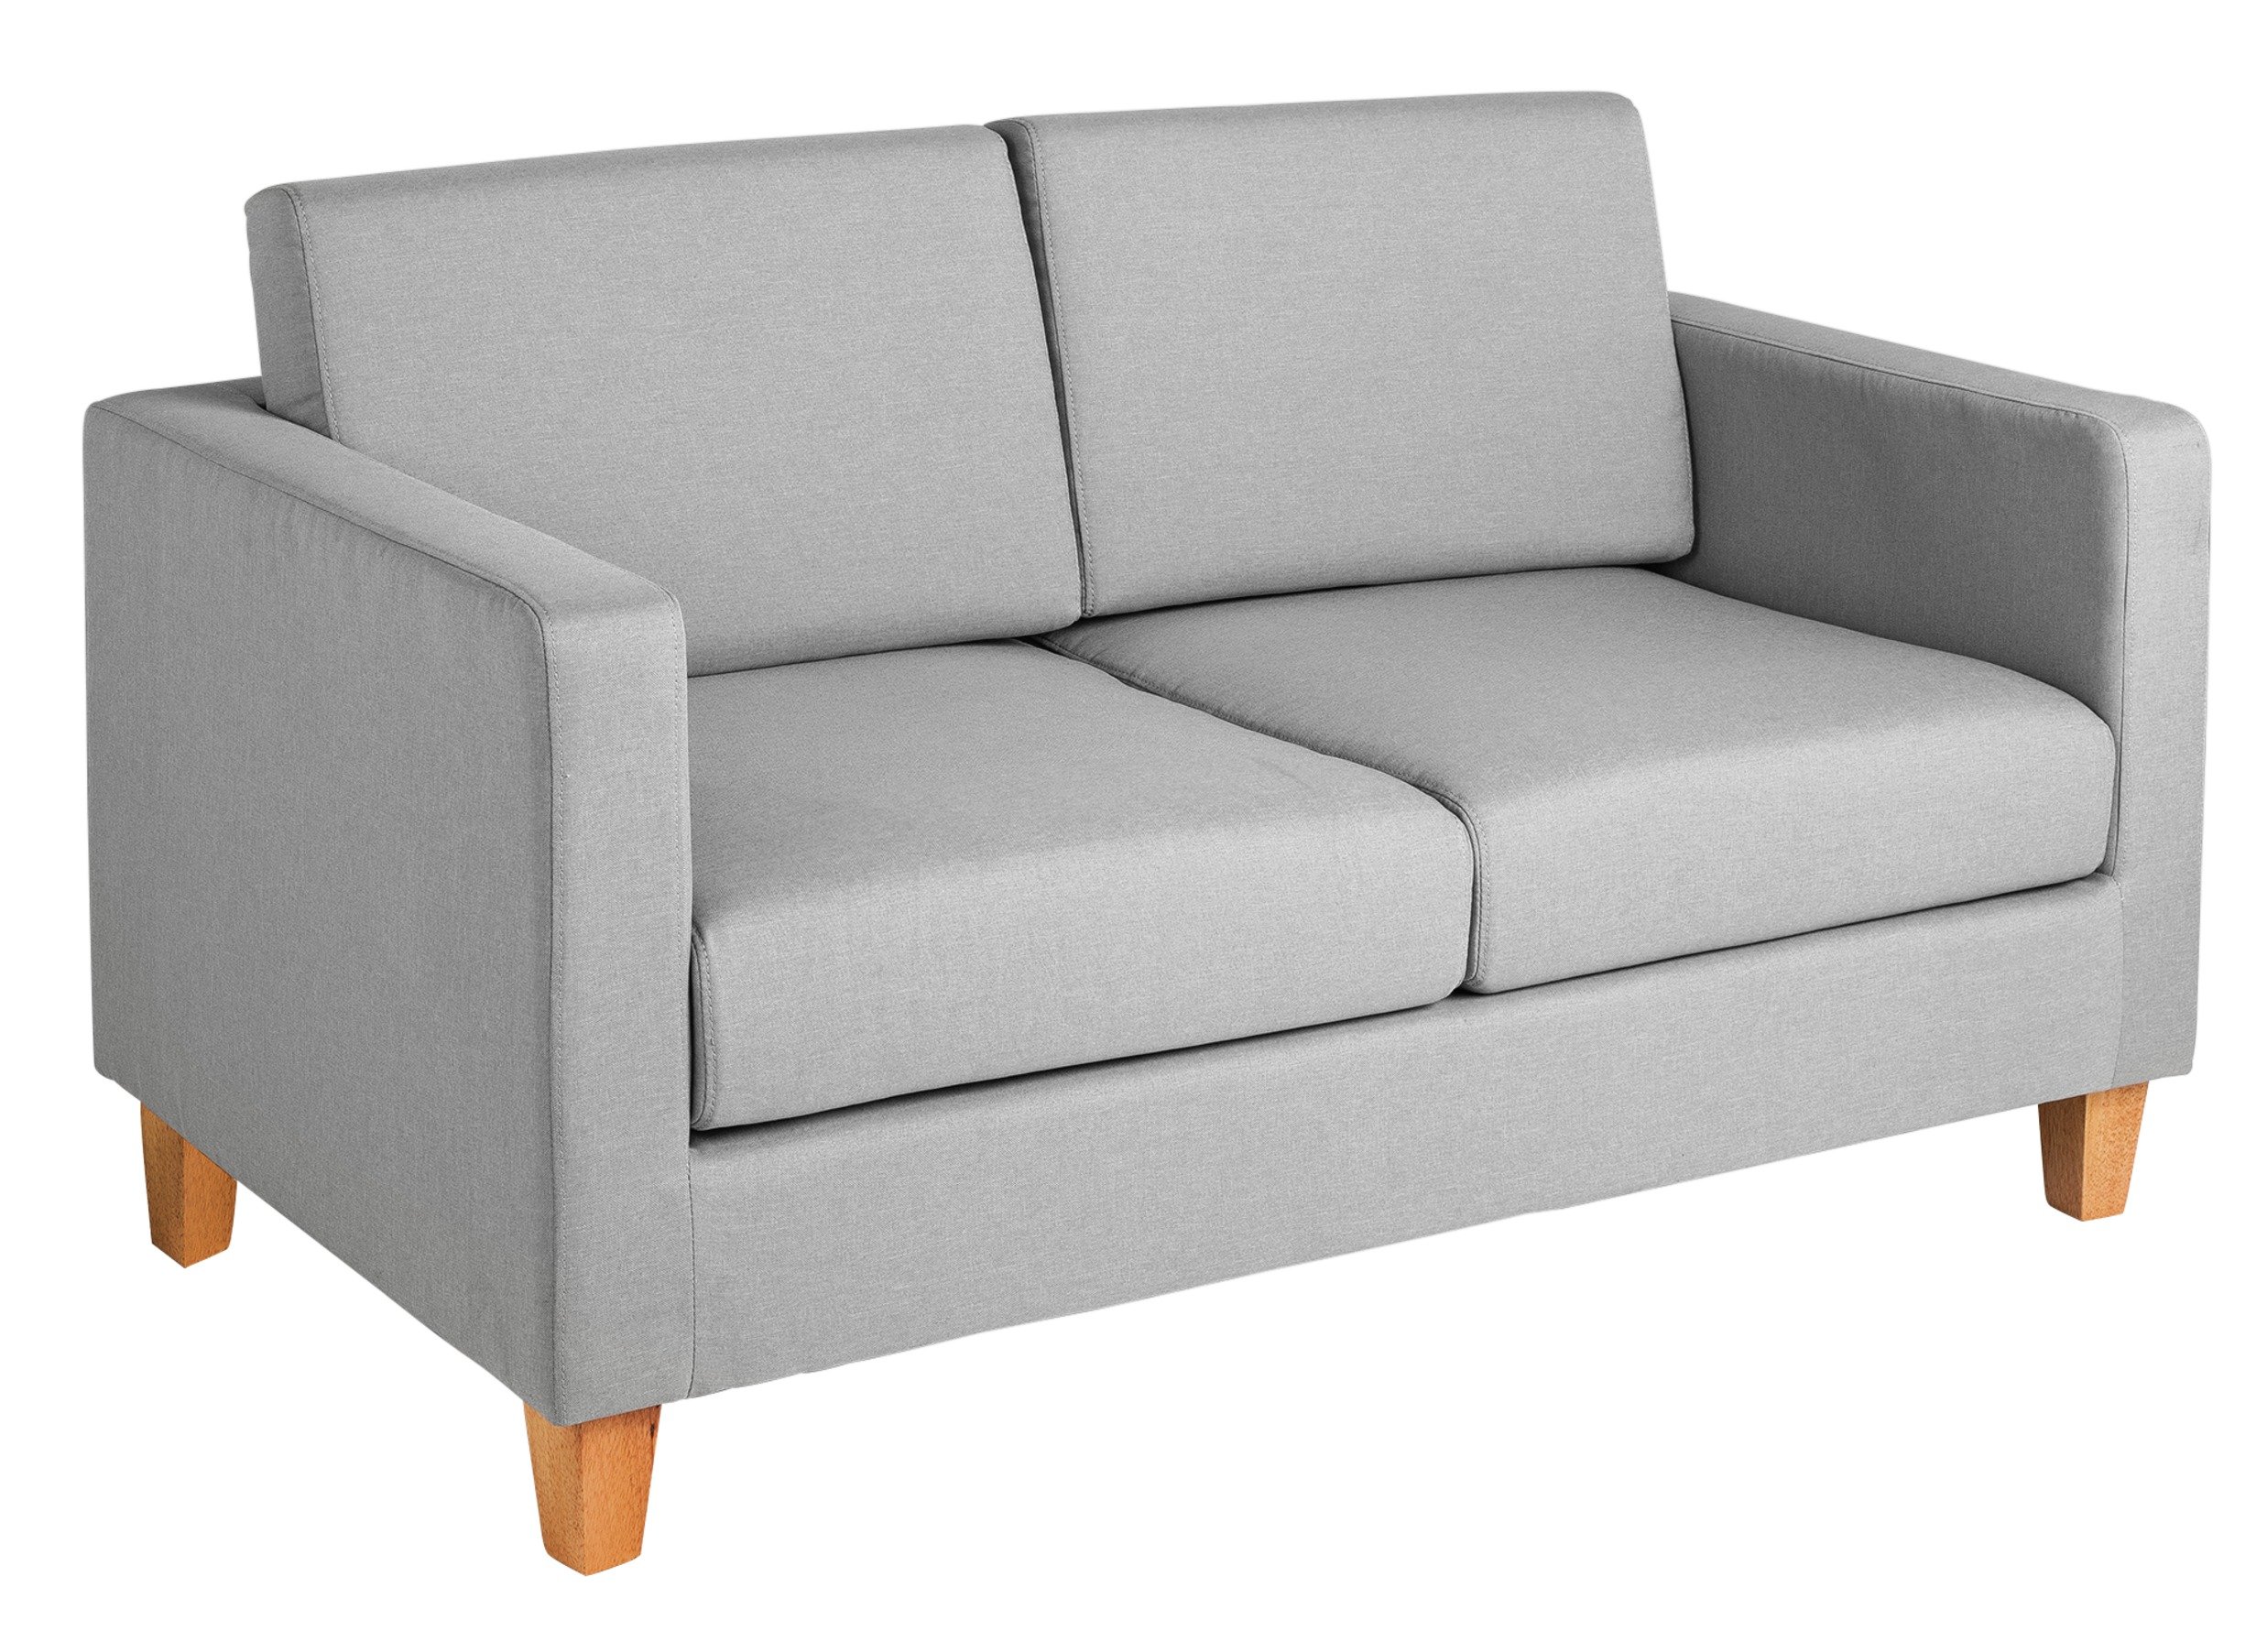 Argos Home Rosie 2 Seater Fabric Sofa Review